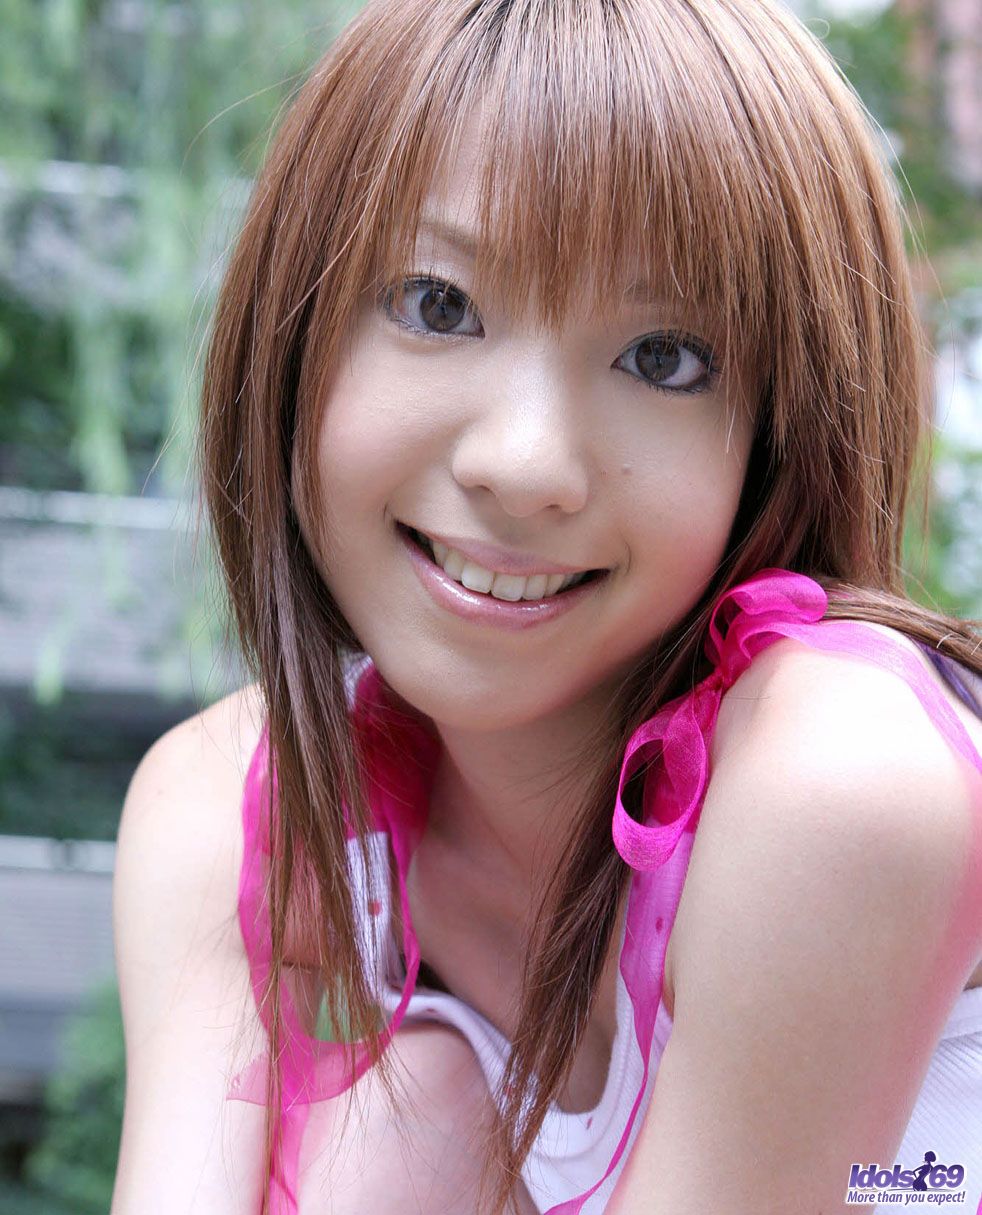 Adorable Japanese redhead Yuuna licks an ice cream cone at a playground porn photo #425841879 | Idols 69 Pics, Yuuna, Japanese, mobile porn